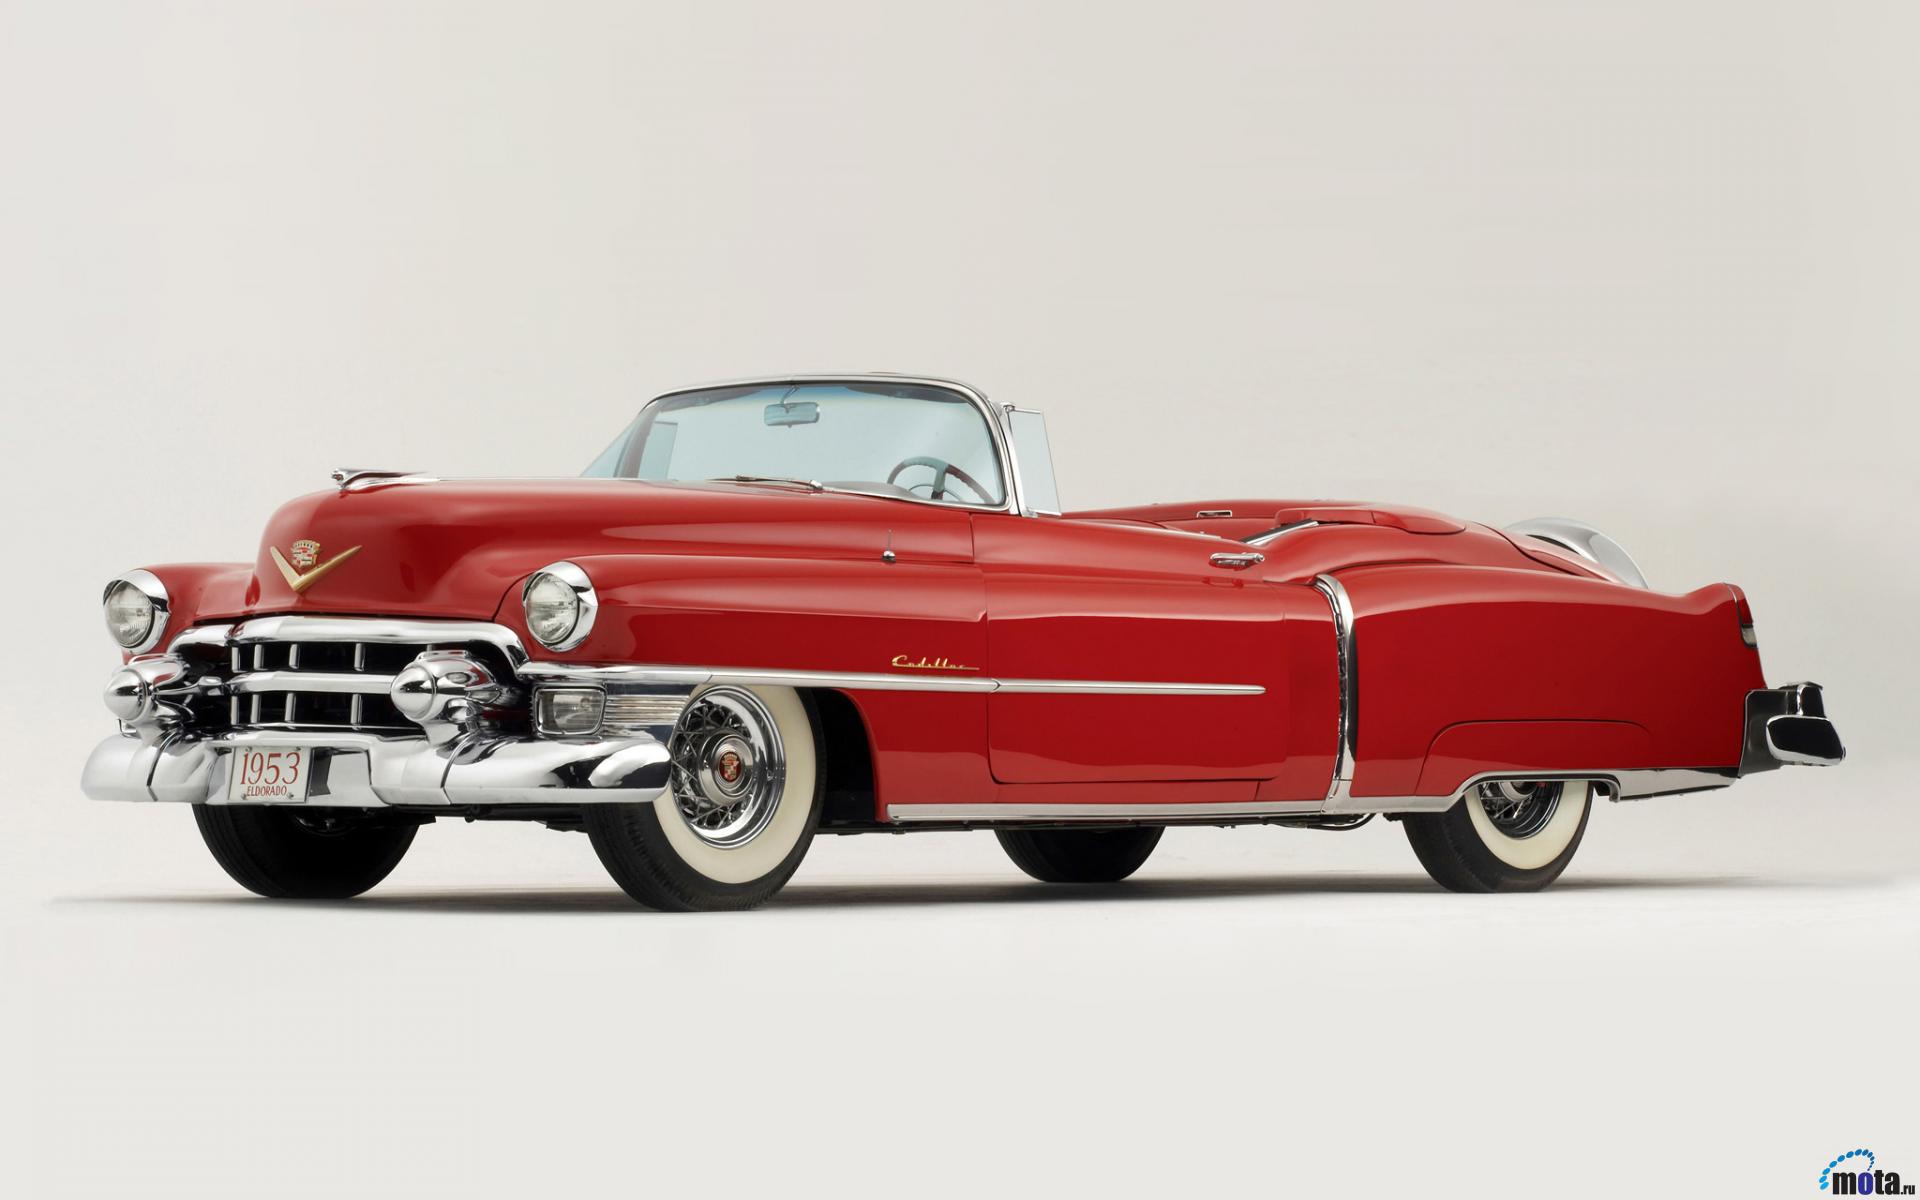 1953 Cadillac Eldorado HD wallpapers, Desktop wallpaper - most viewed